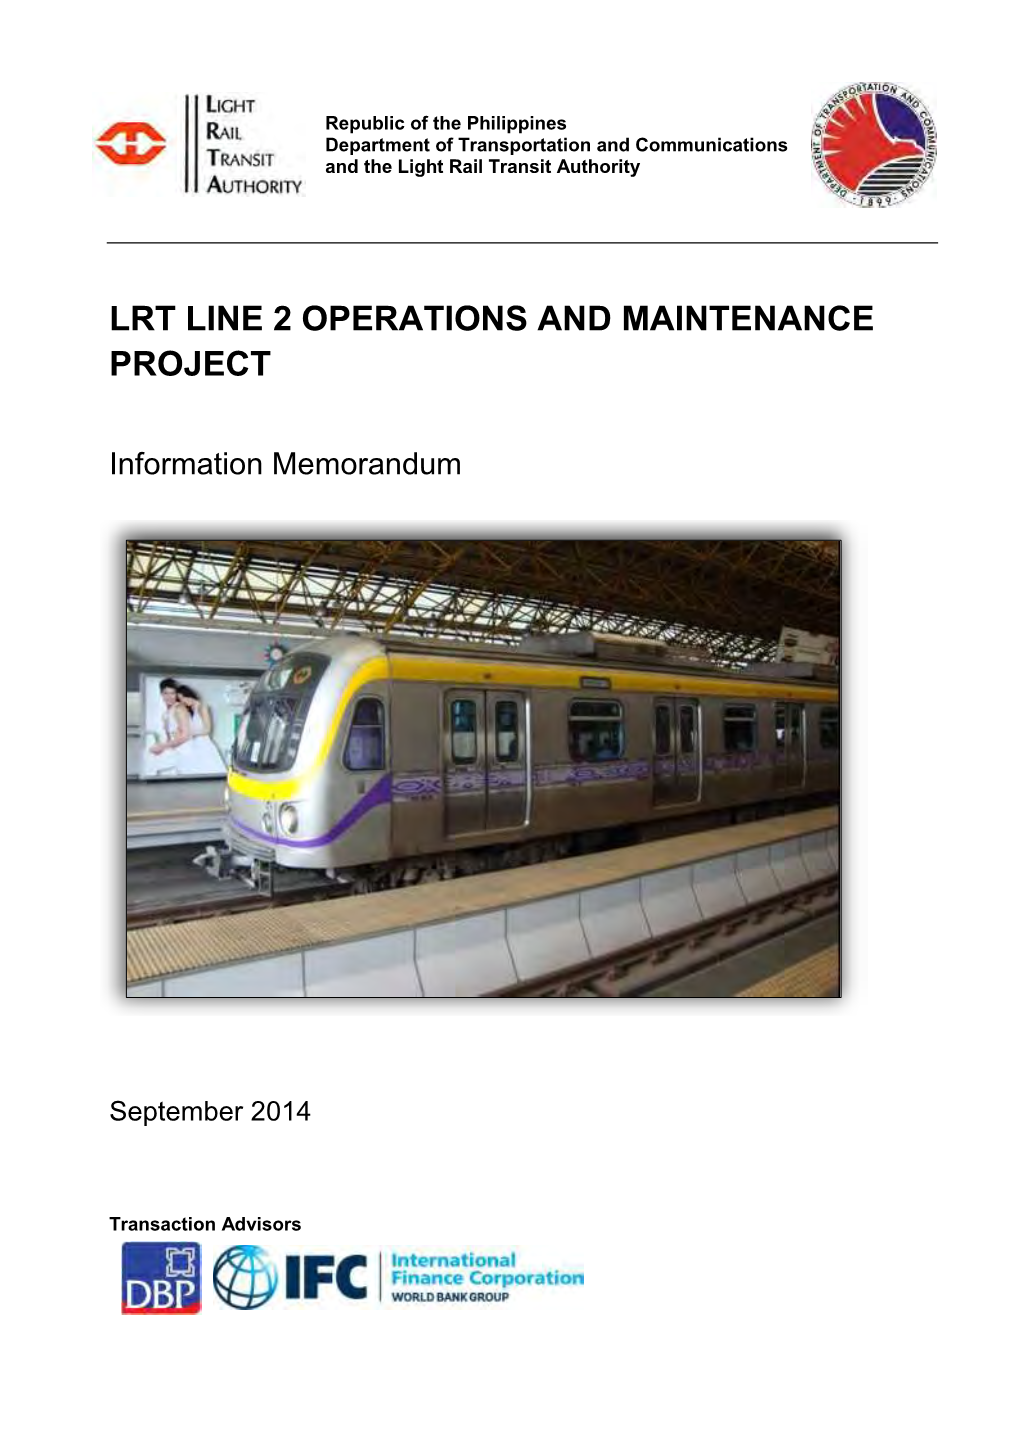 LRT Line 2 Operations and Maintenance Project Information Memorandum September 2014